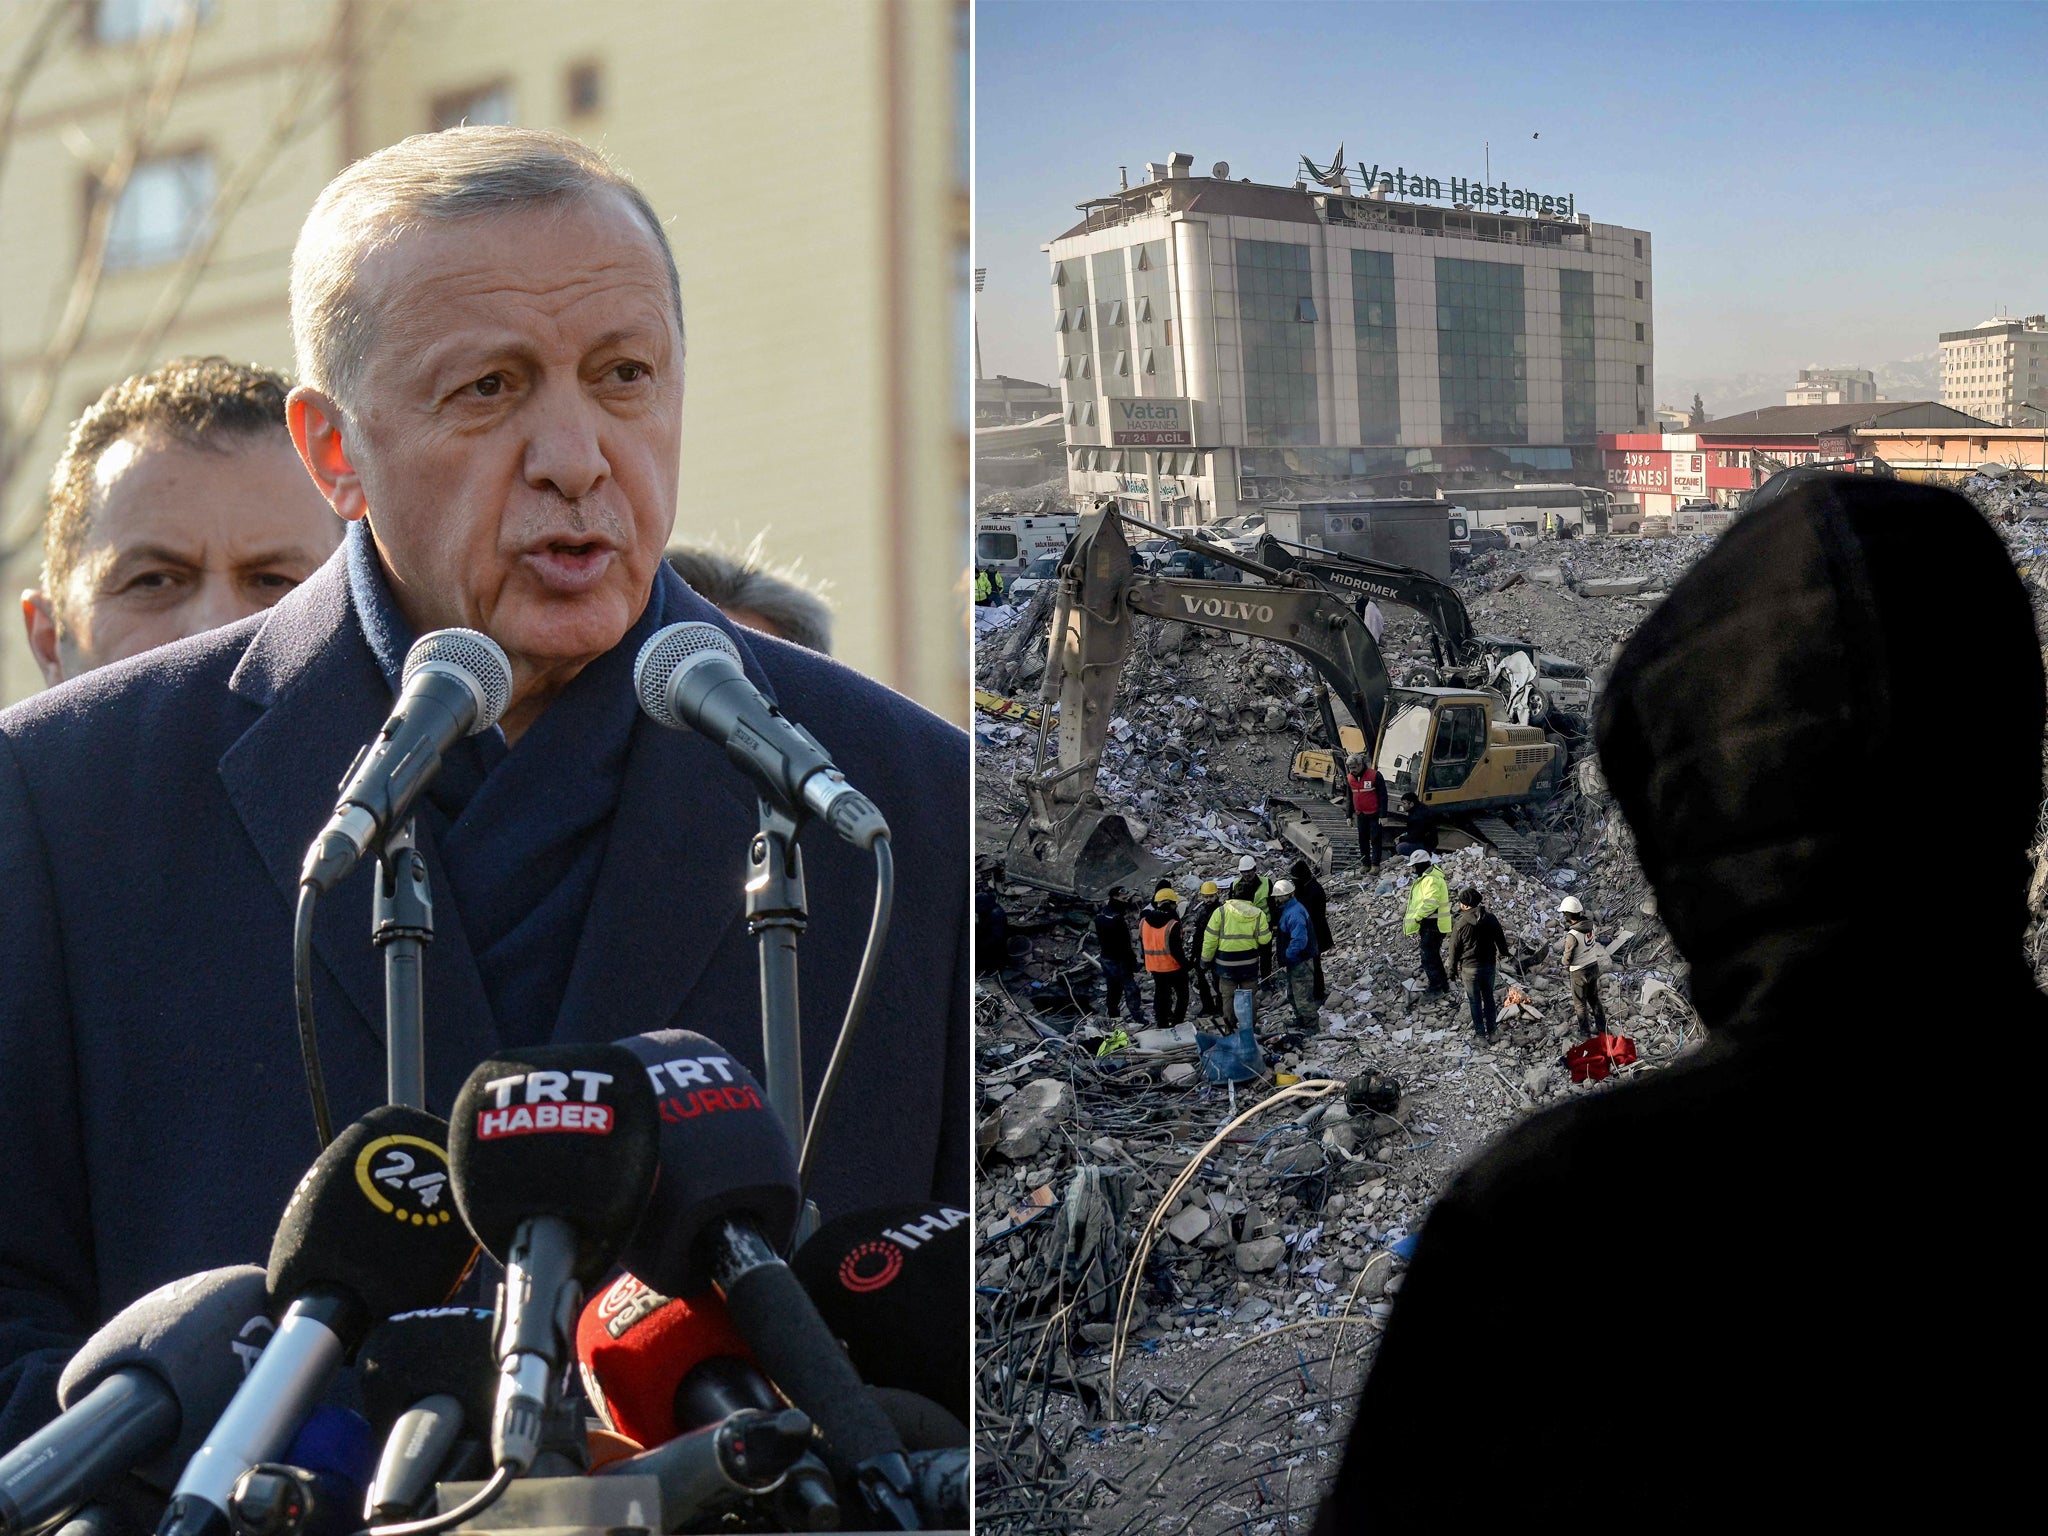 President Erdogan visits a scene of devastation following the recent earthquakes